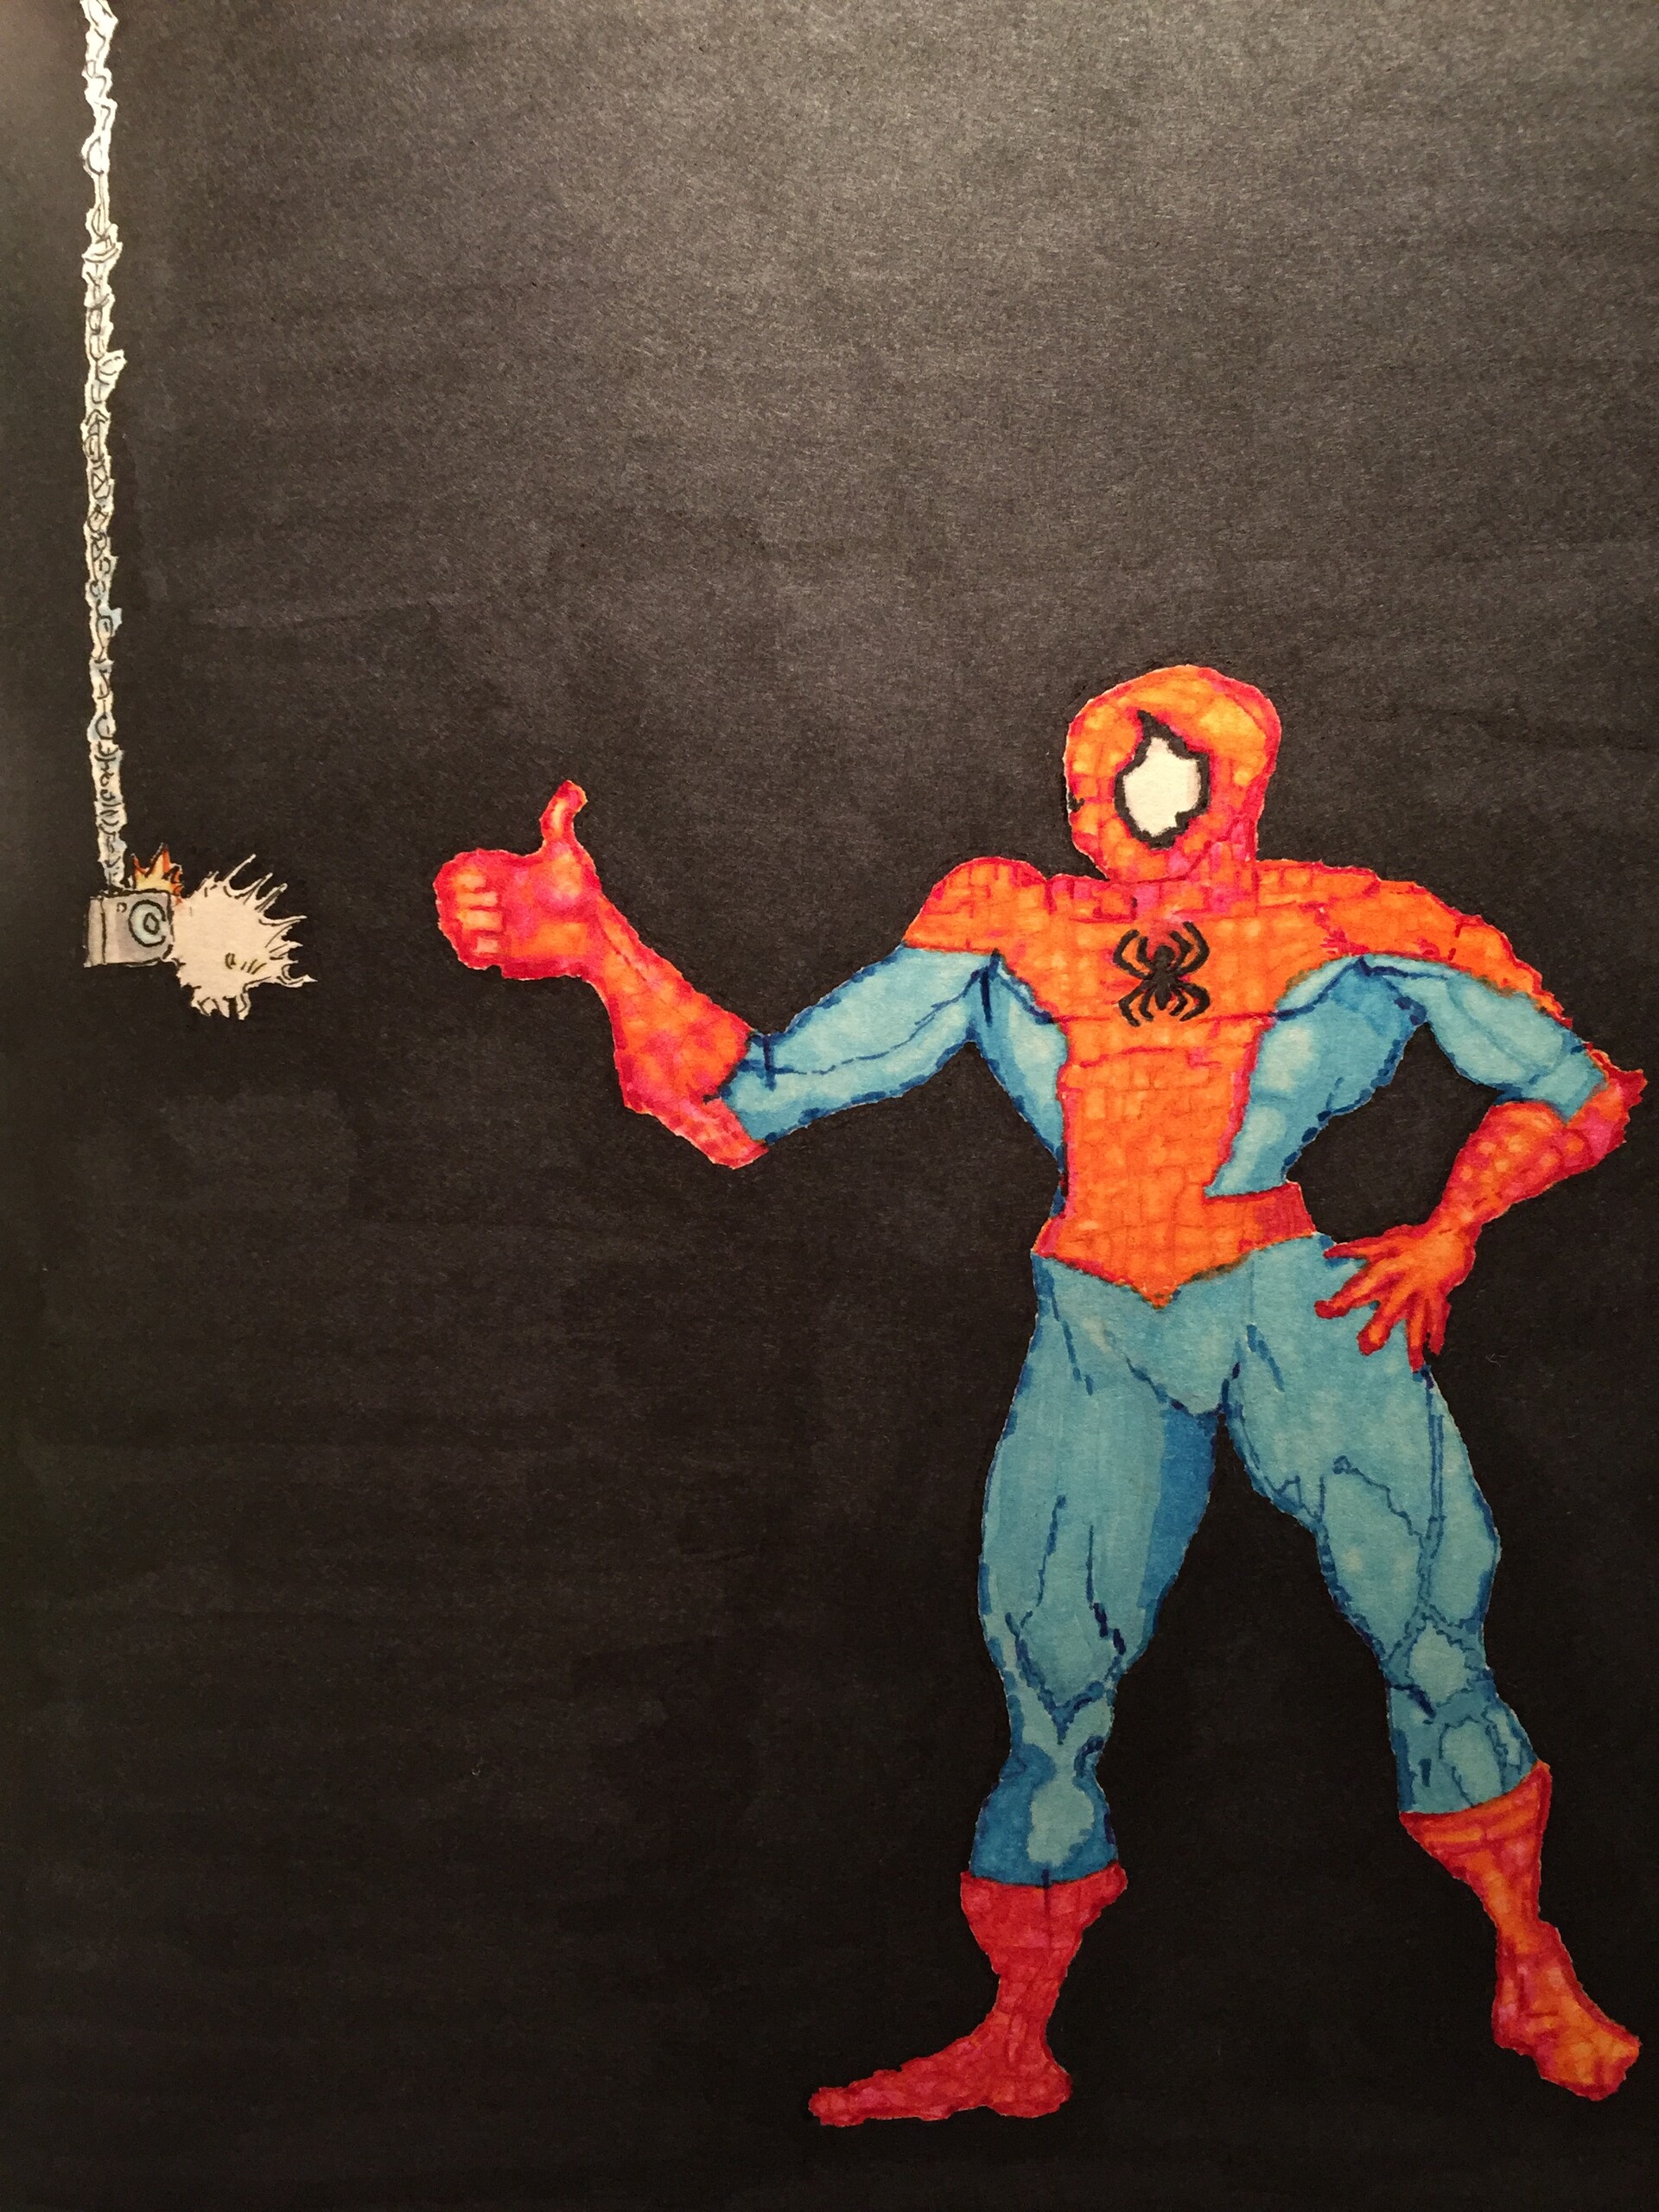 Ian Manning - Marvel Comics (Spider-Man and original Cover design)